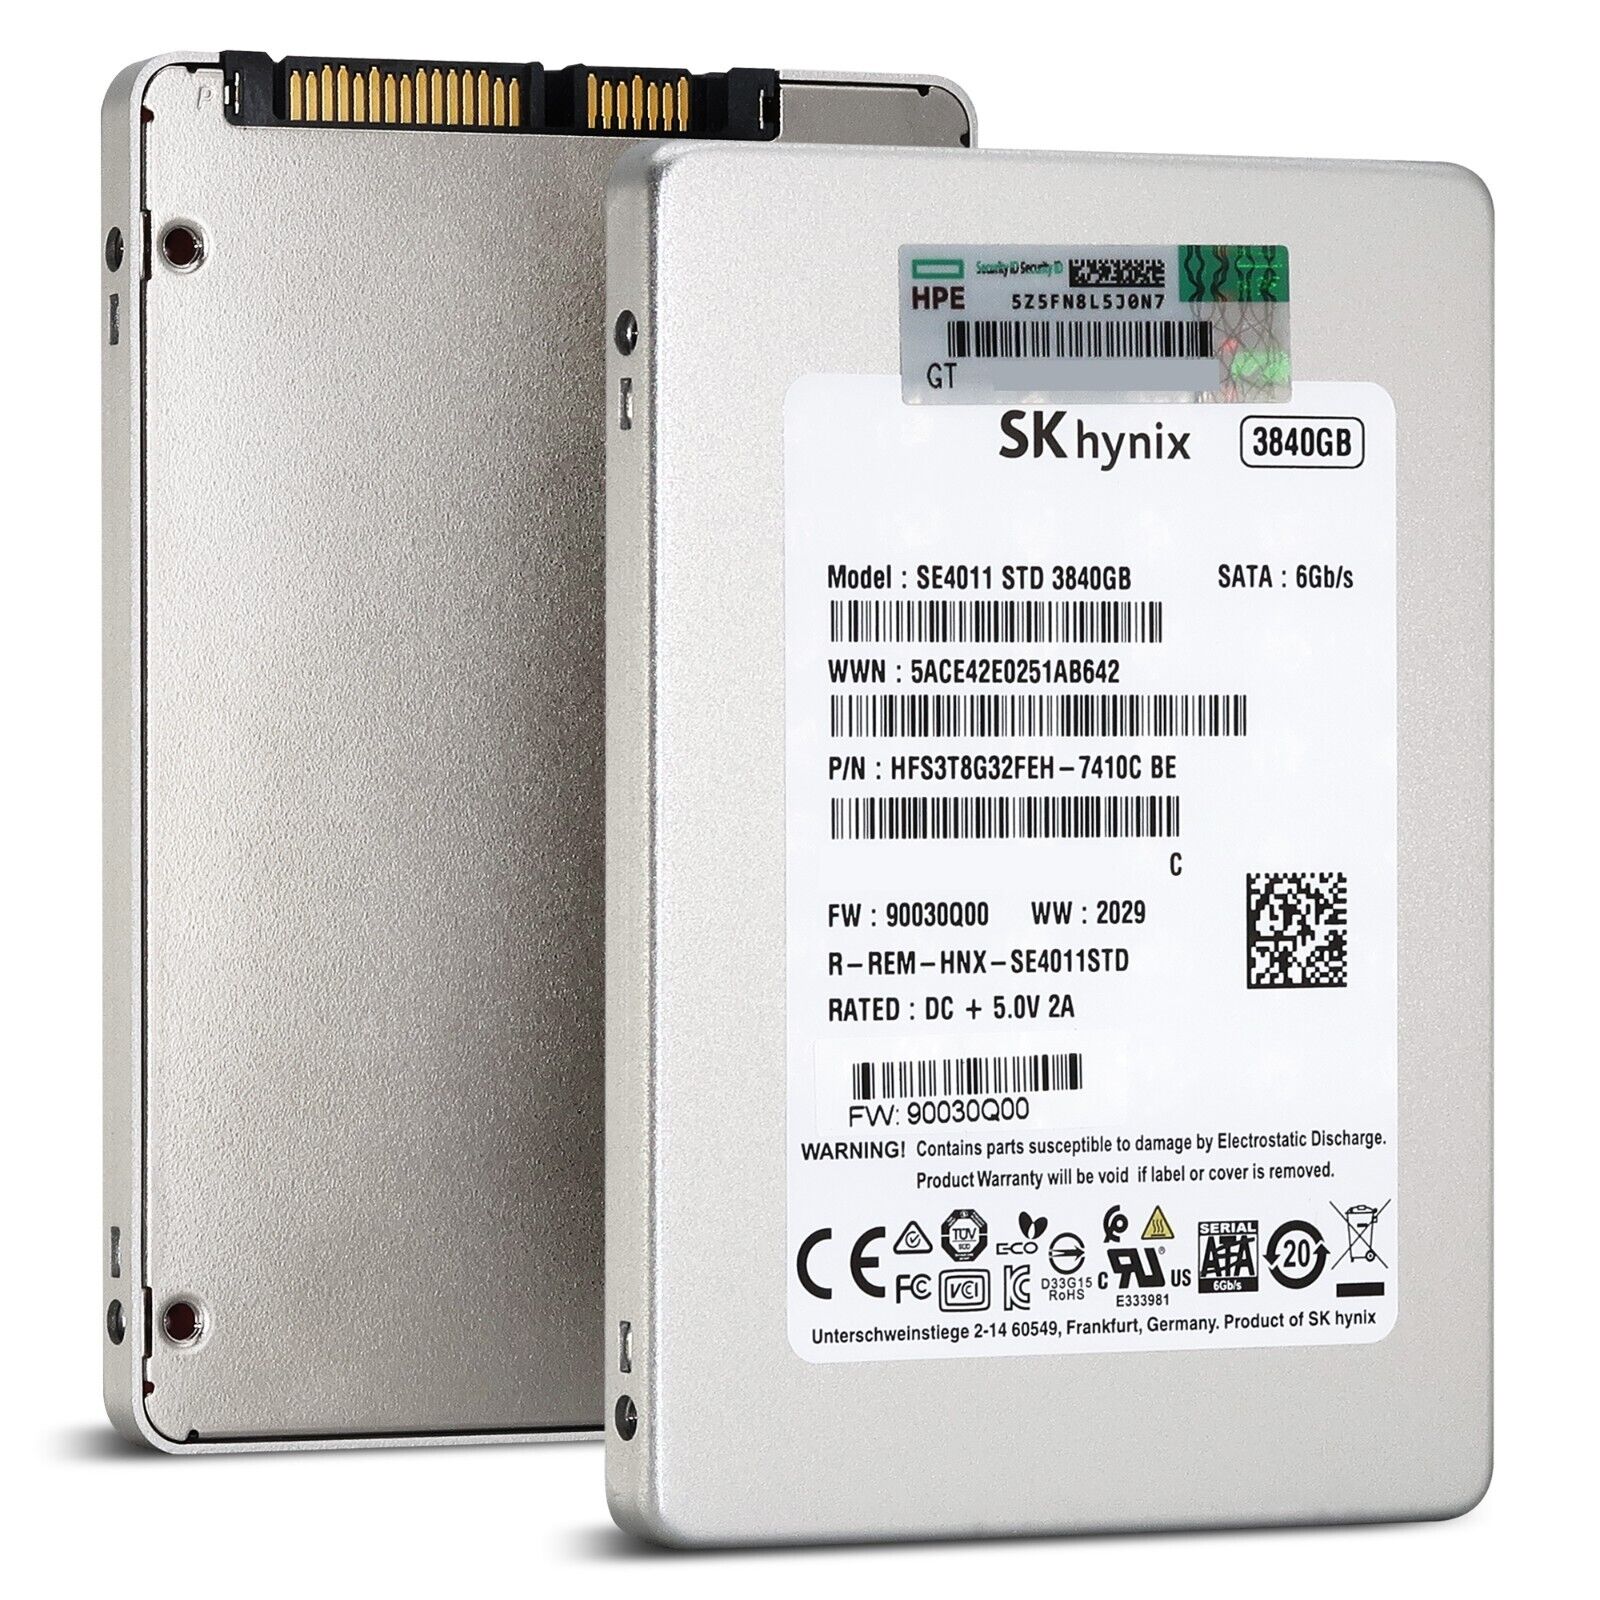 SK Hynix SE4011 HFS3T8G32FEH 3.84TB SATA 6Gb/s 3D TLC 2.5in Solid State Drive